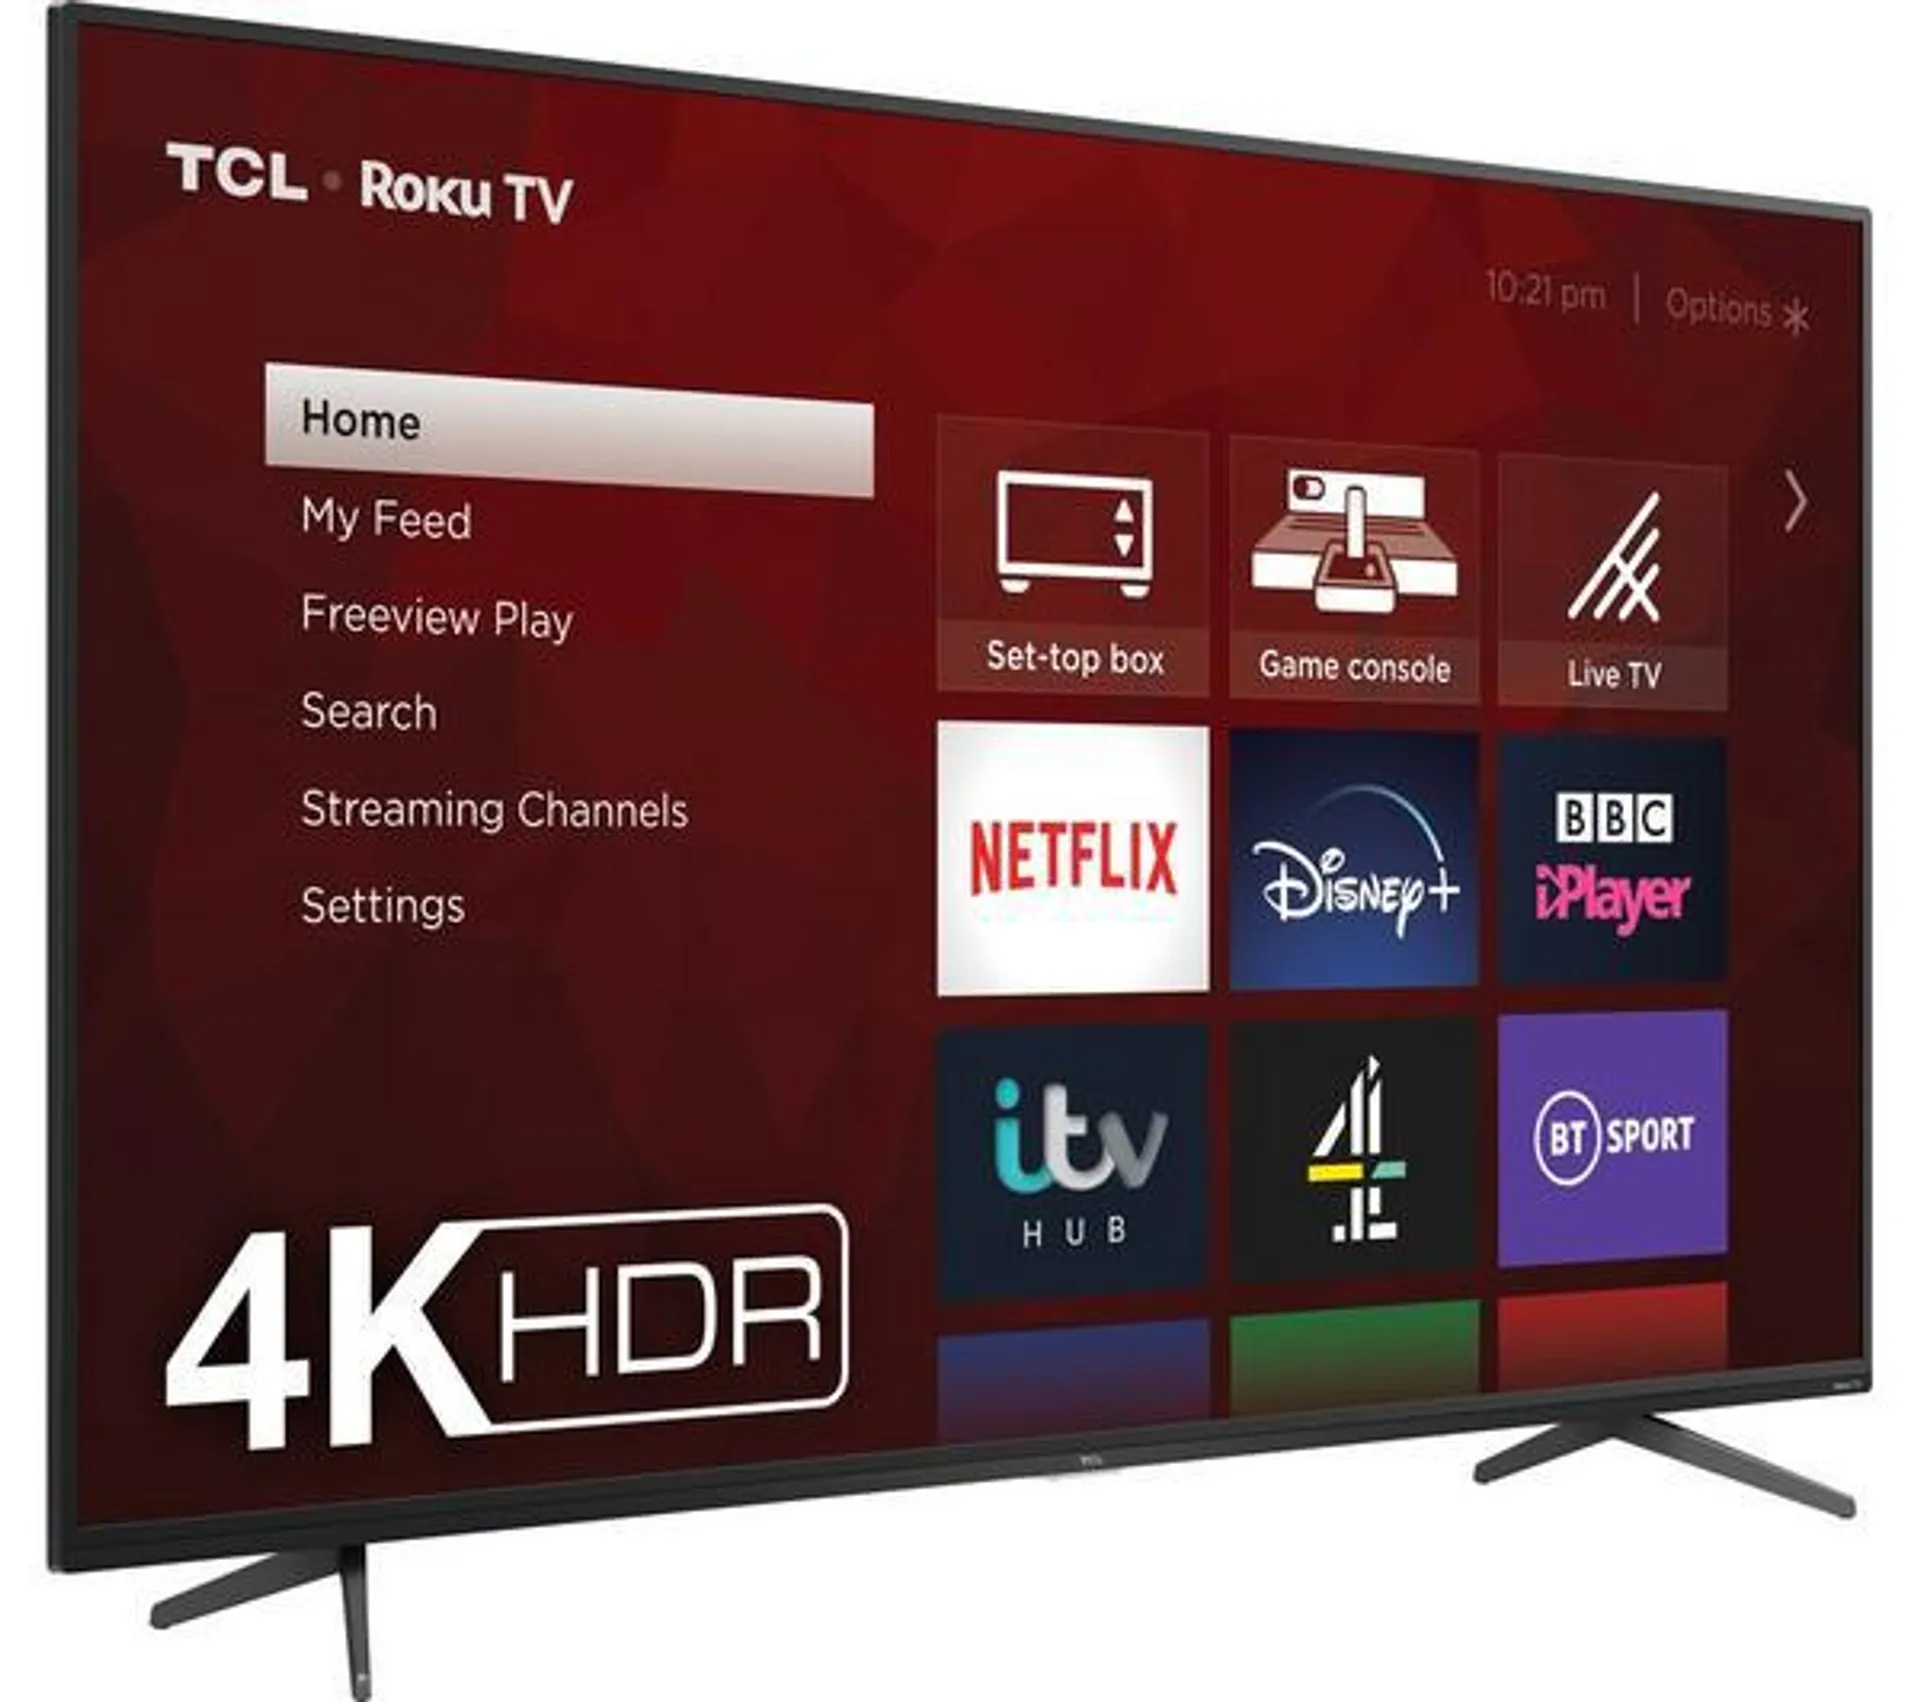 TCL 43RP620K Roku TV 43" Smart 4K Ultra HD HDR LED TV